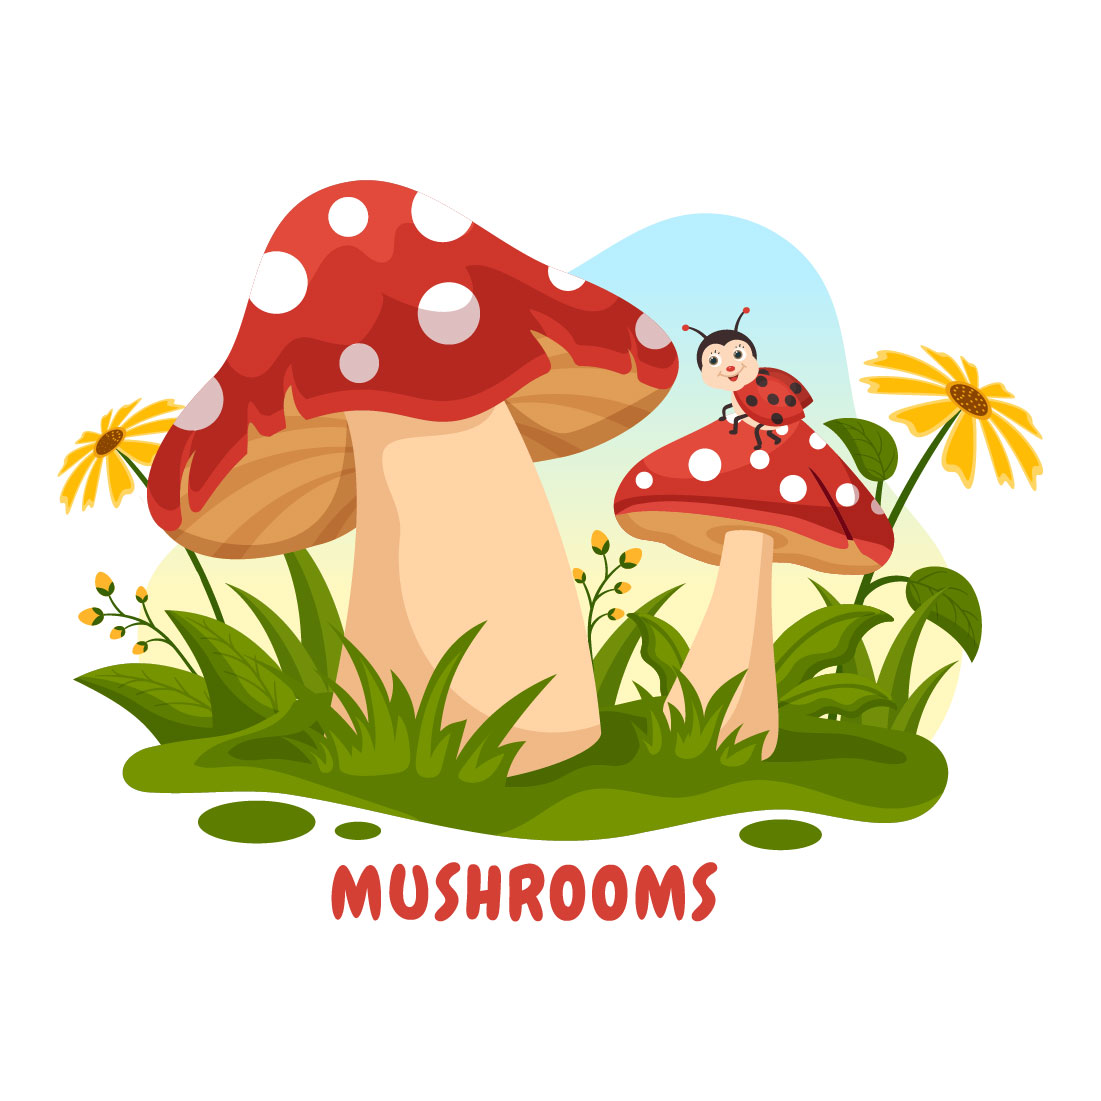 13 Mushrooms Design Illustration preview image.